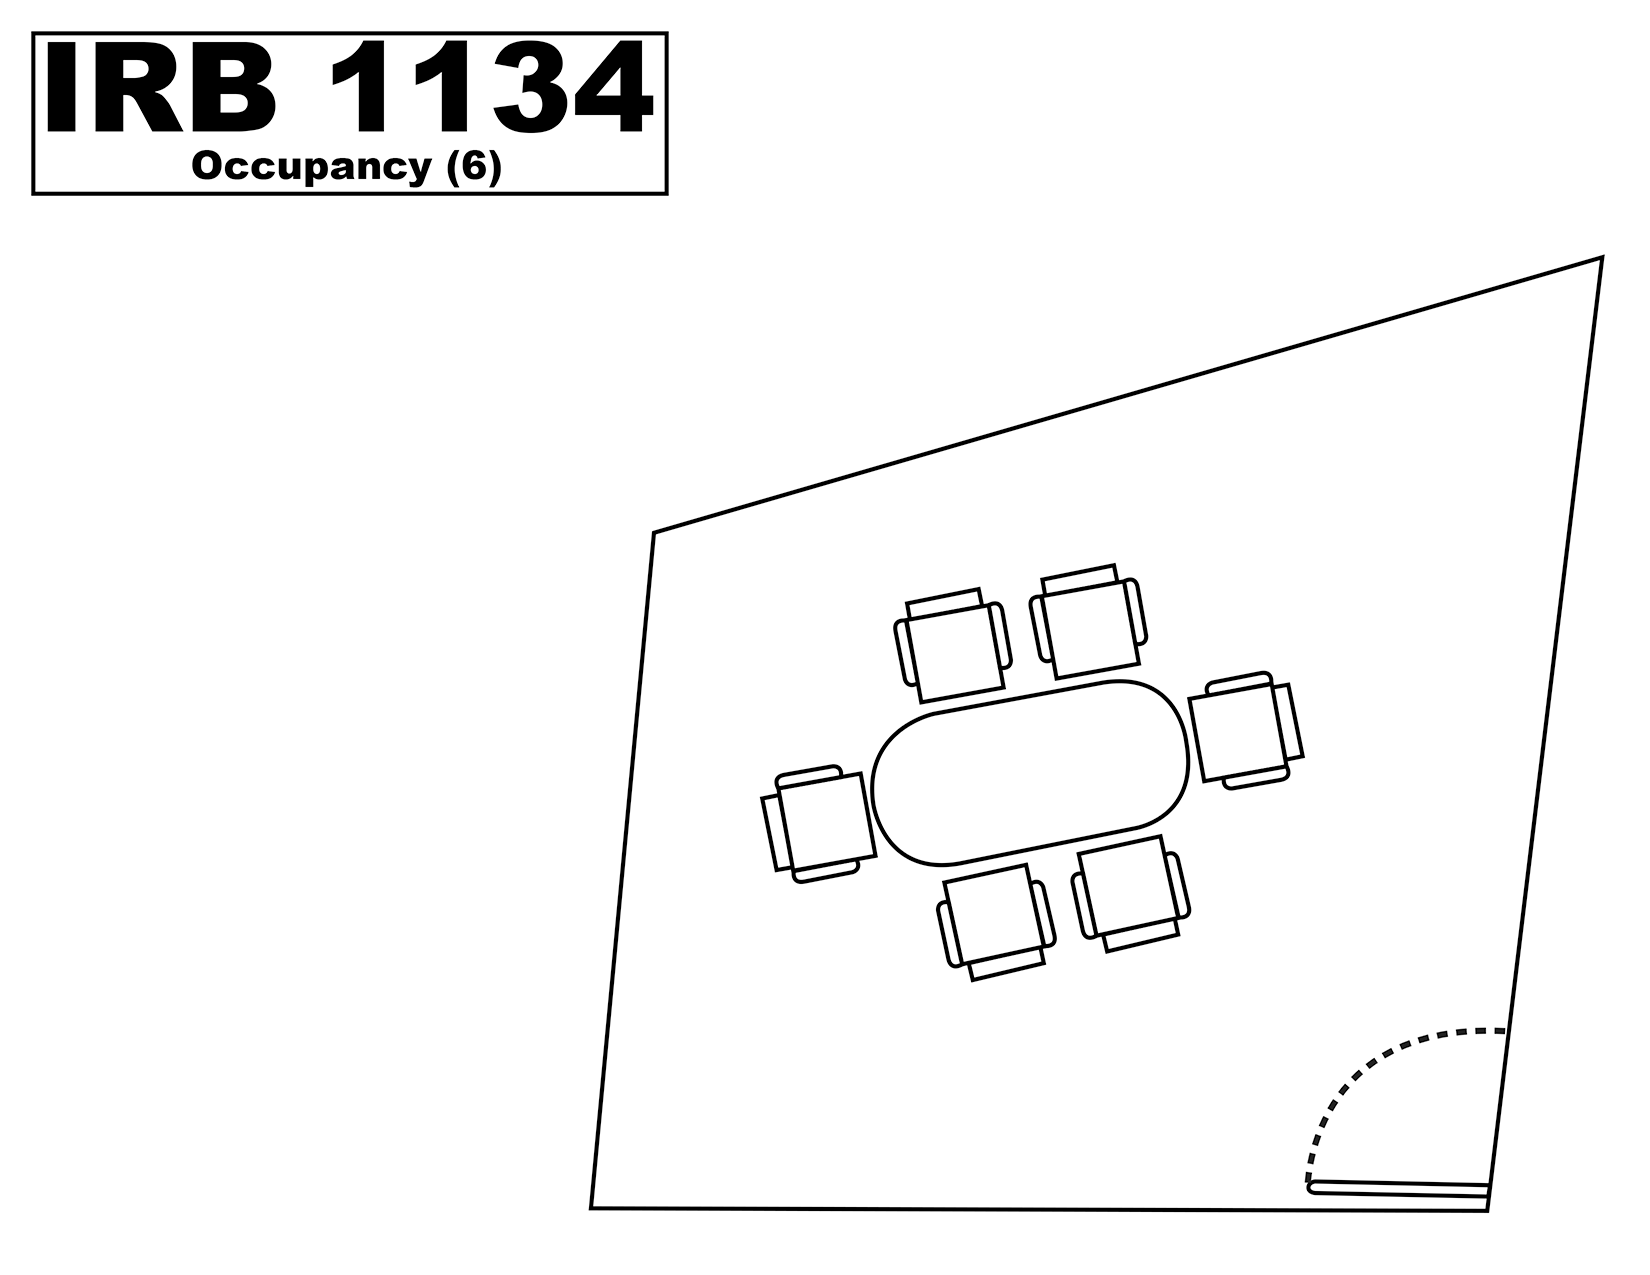 IRB1134 floorplan